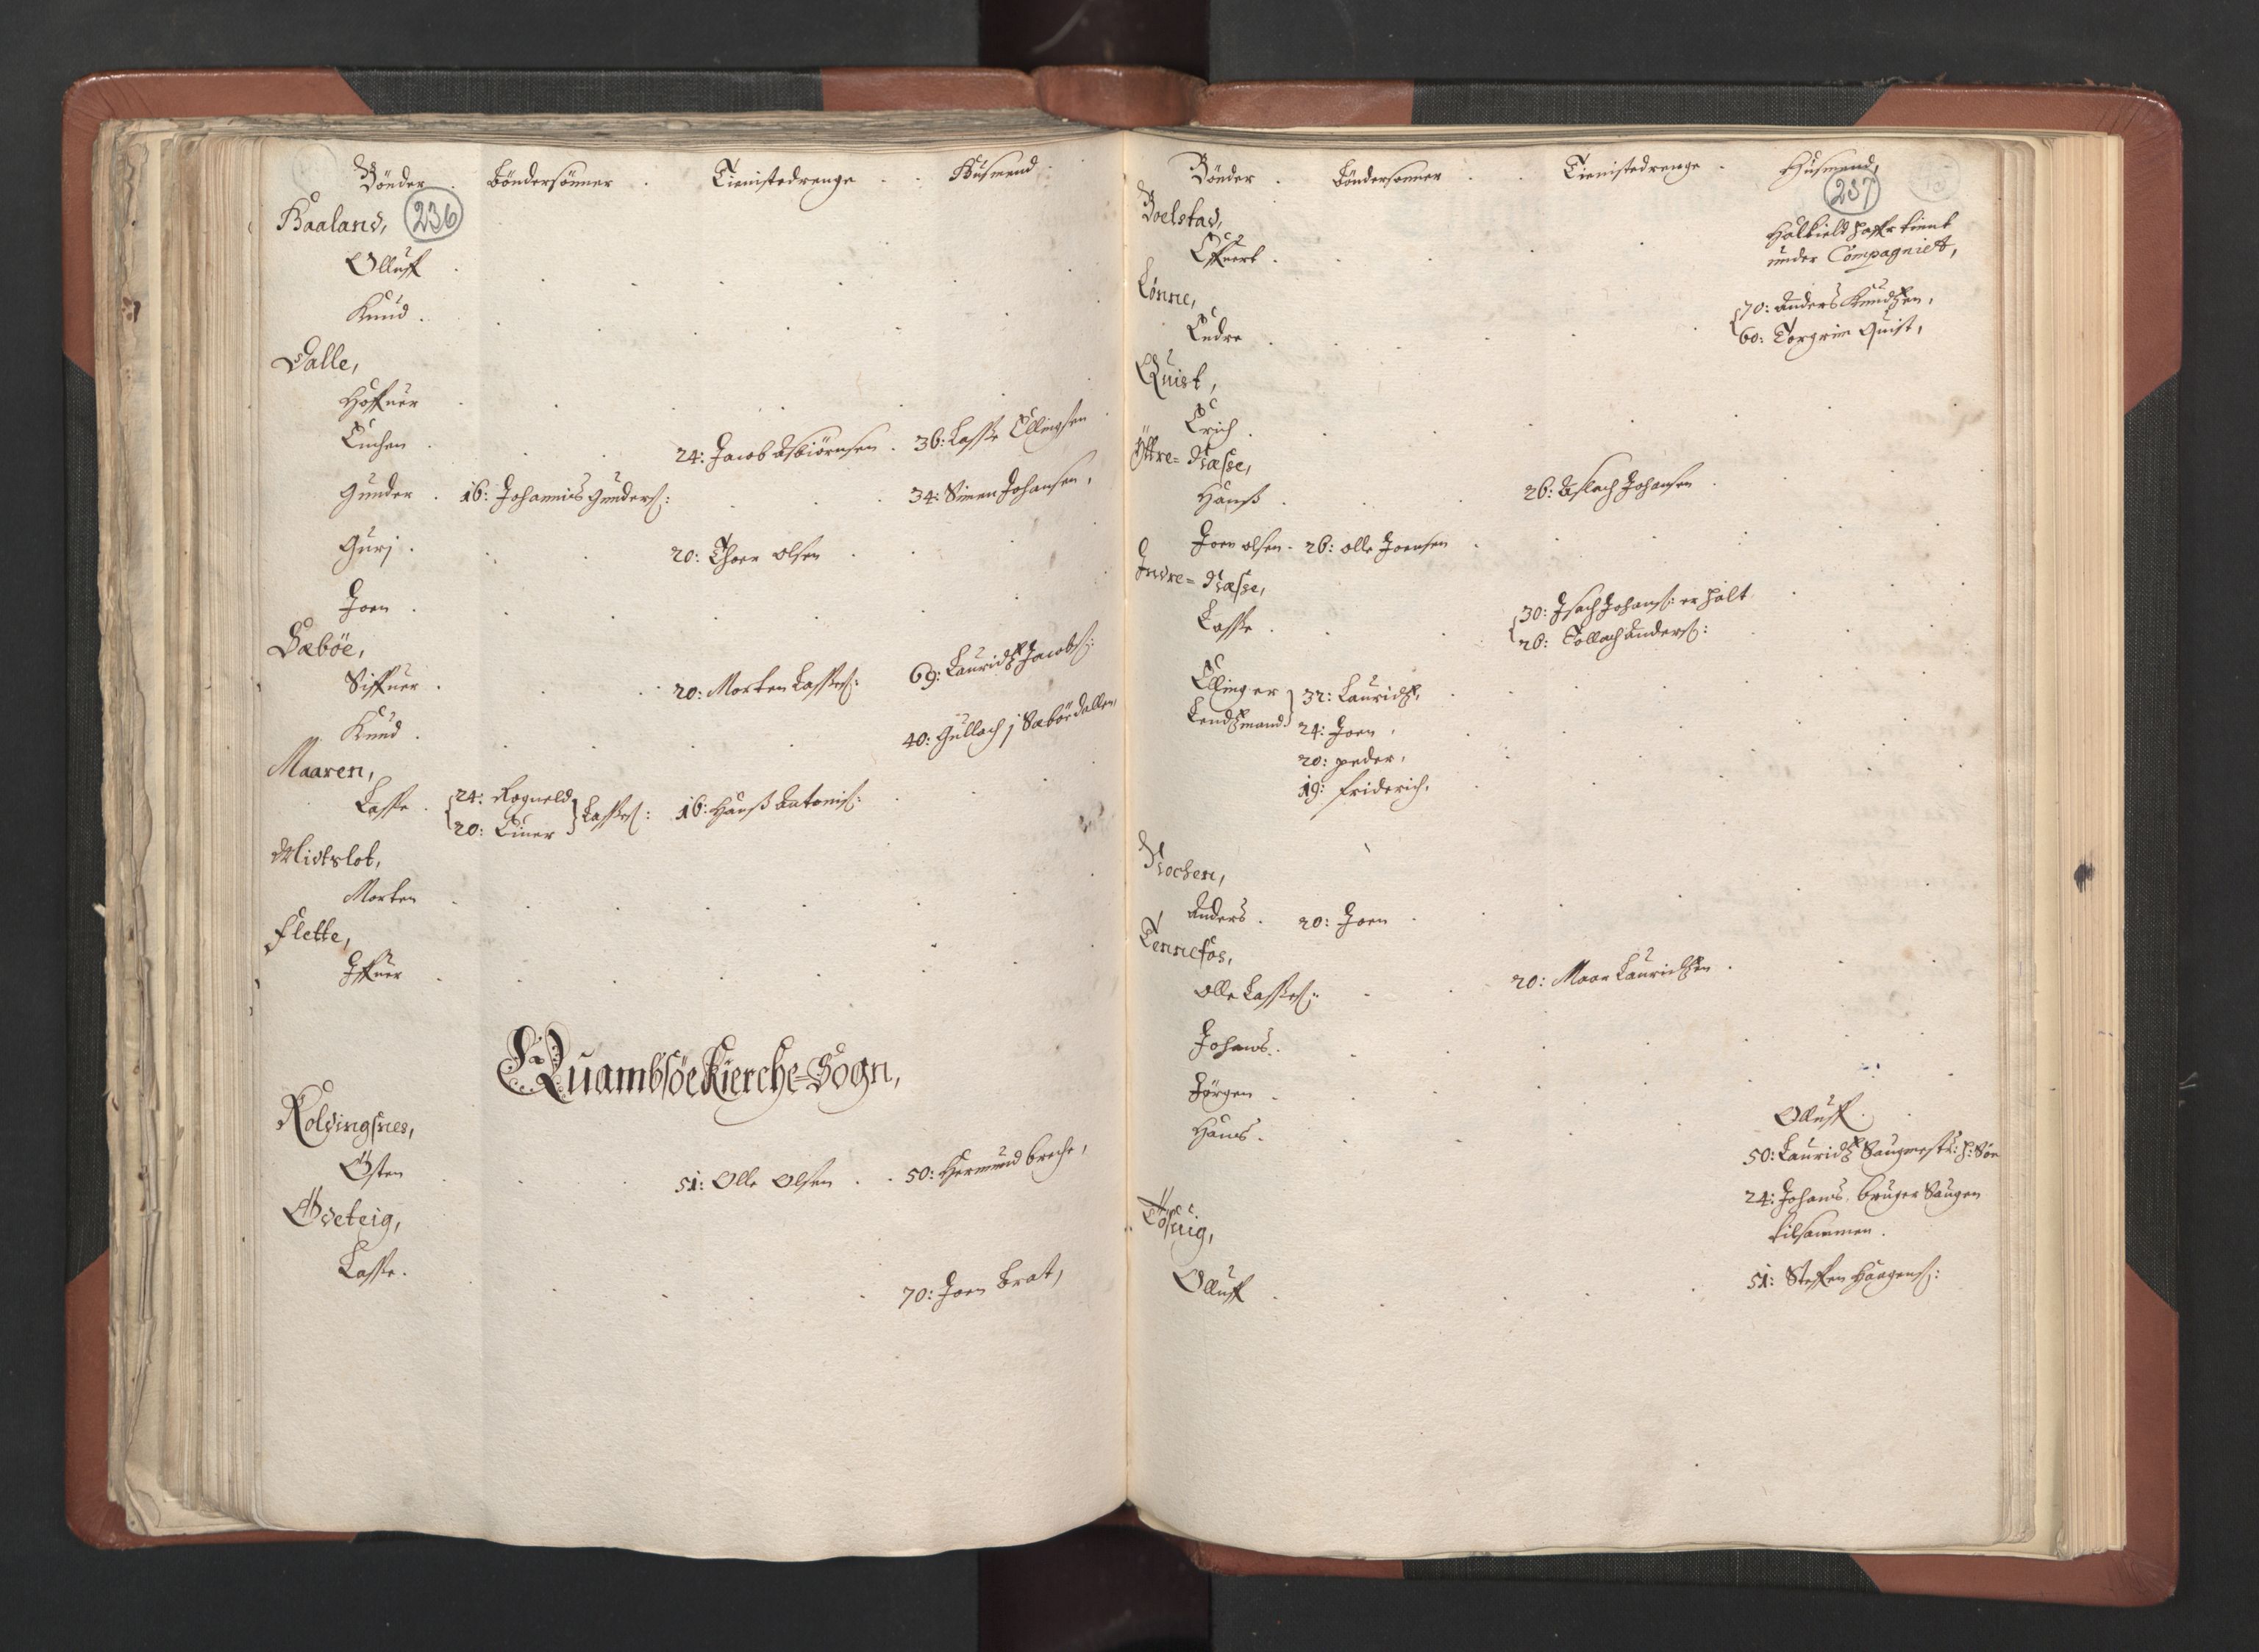 RA, Fogdenes og sorenskrivernes manntall 1664-1666, nr. 14: Hardanger len, Ytre Sogn fogderi og Indre Sogn fogderi, 1664-1665, s. 236-237